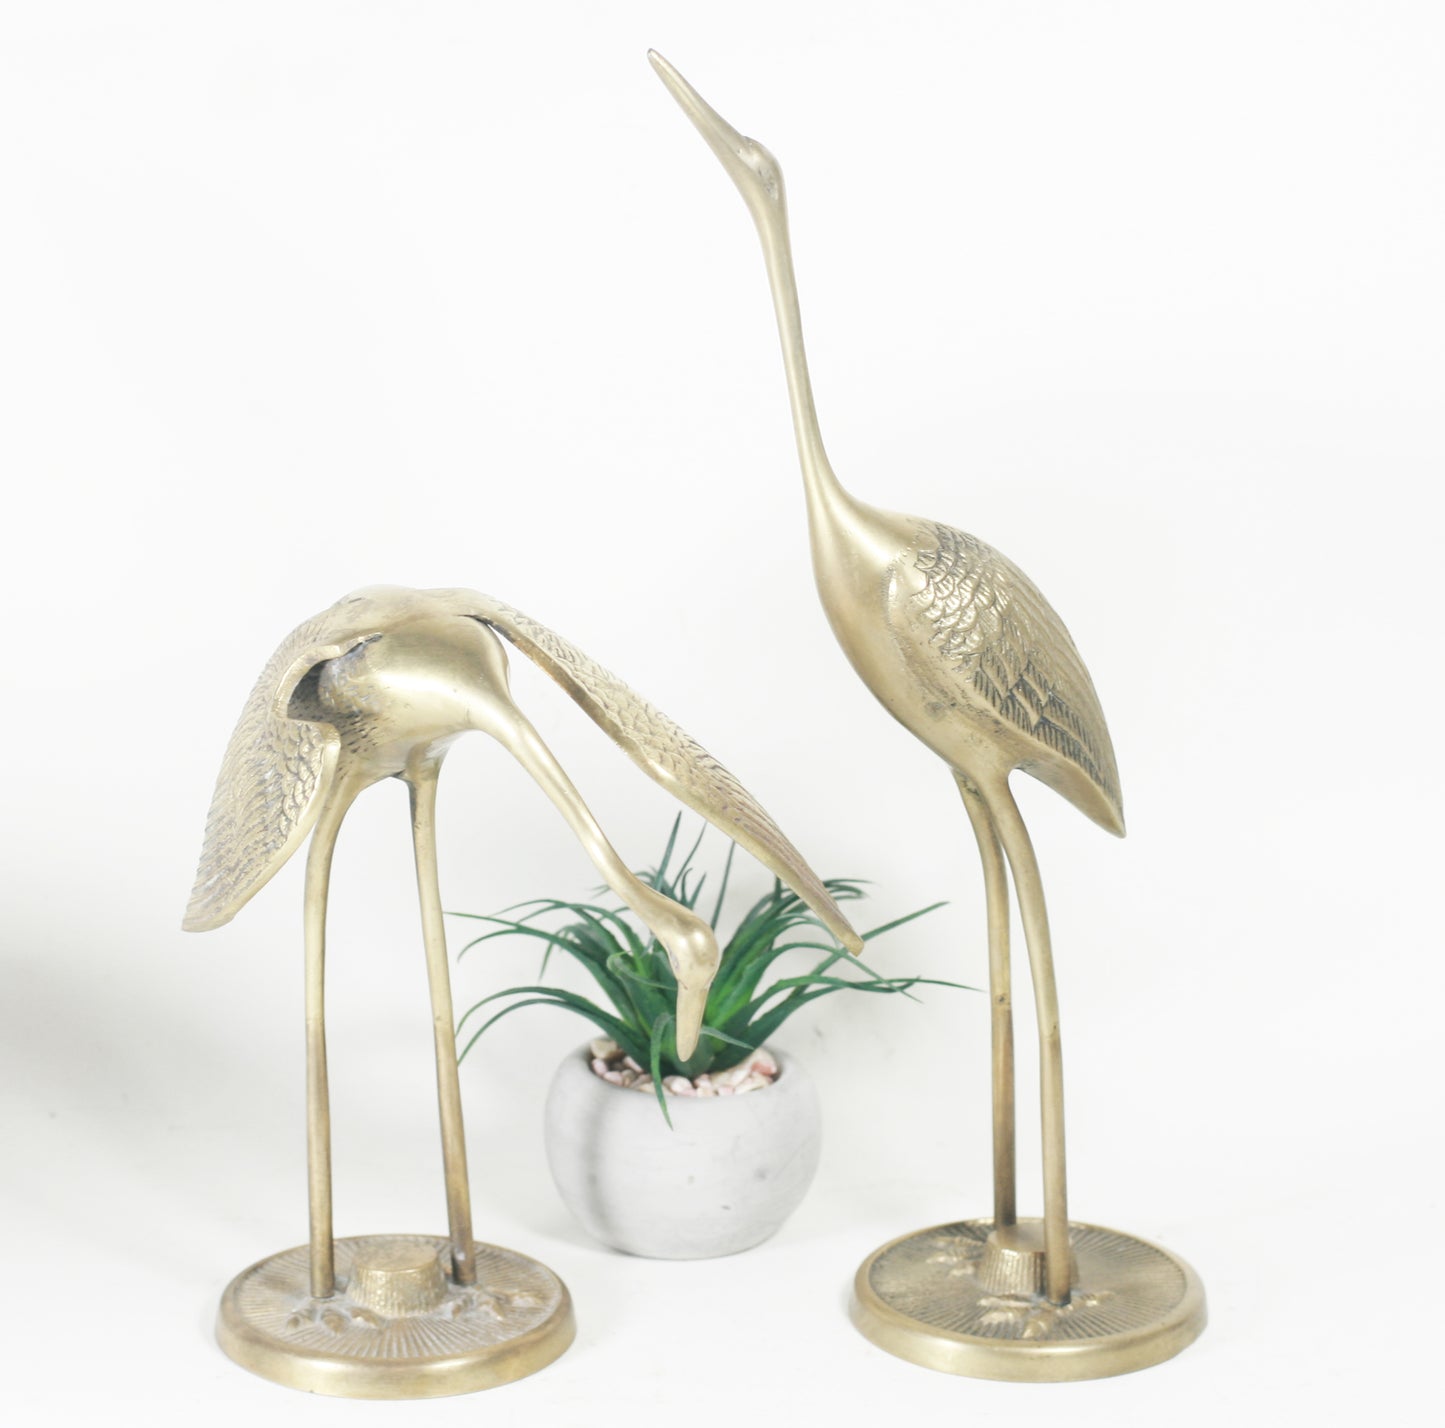 Pair of Vintage Brass Cranes